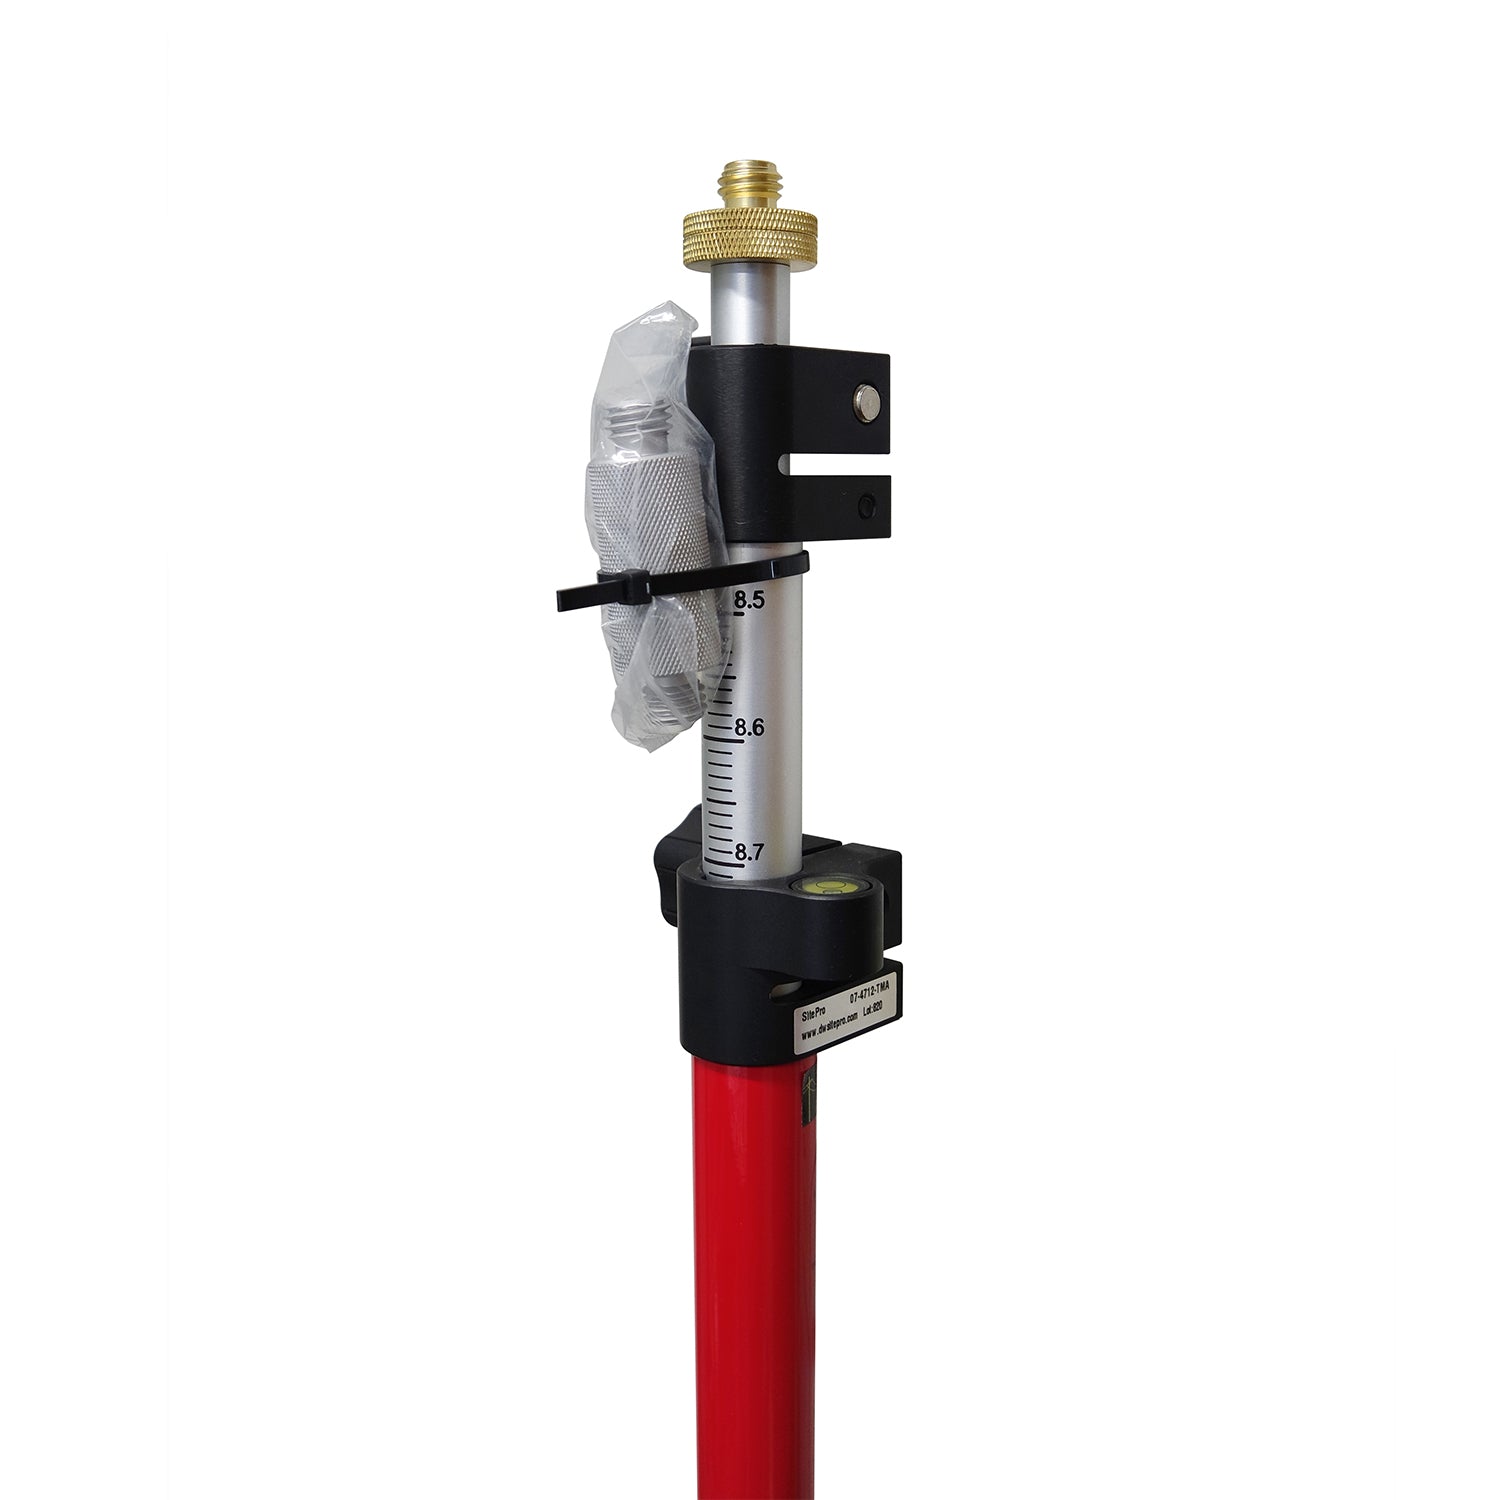 SitePro 12 ft Twist Lock Prism Pole (10ths, Metric) -Rods, Poles & Accessories- eGPS Solutions Inc.